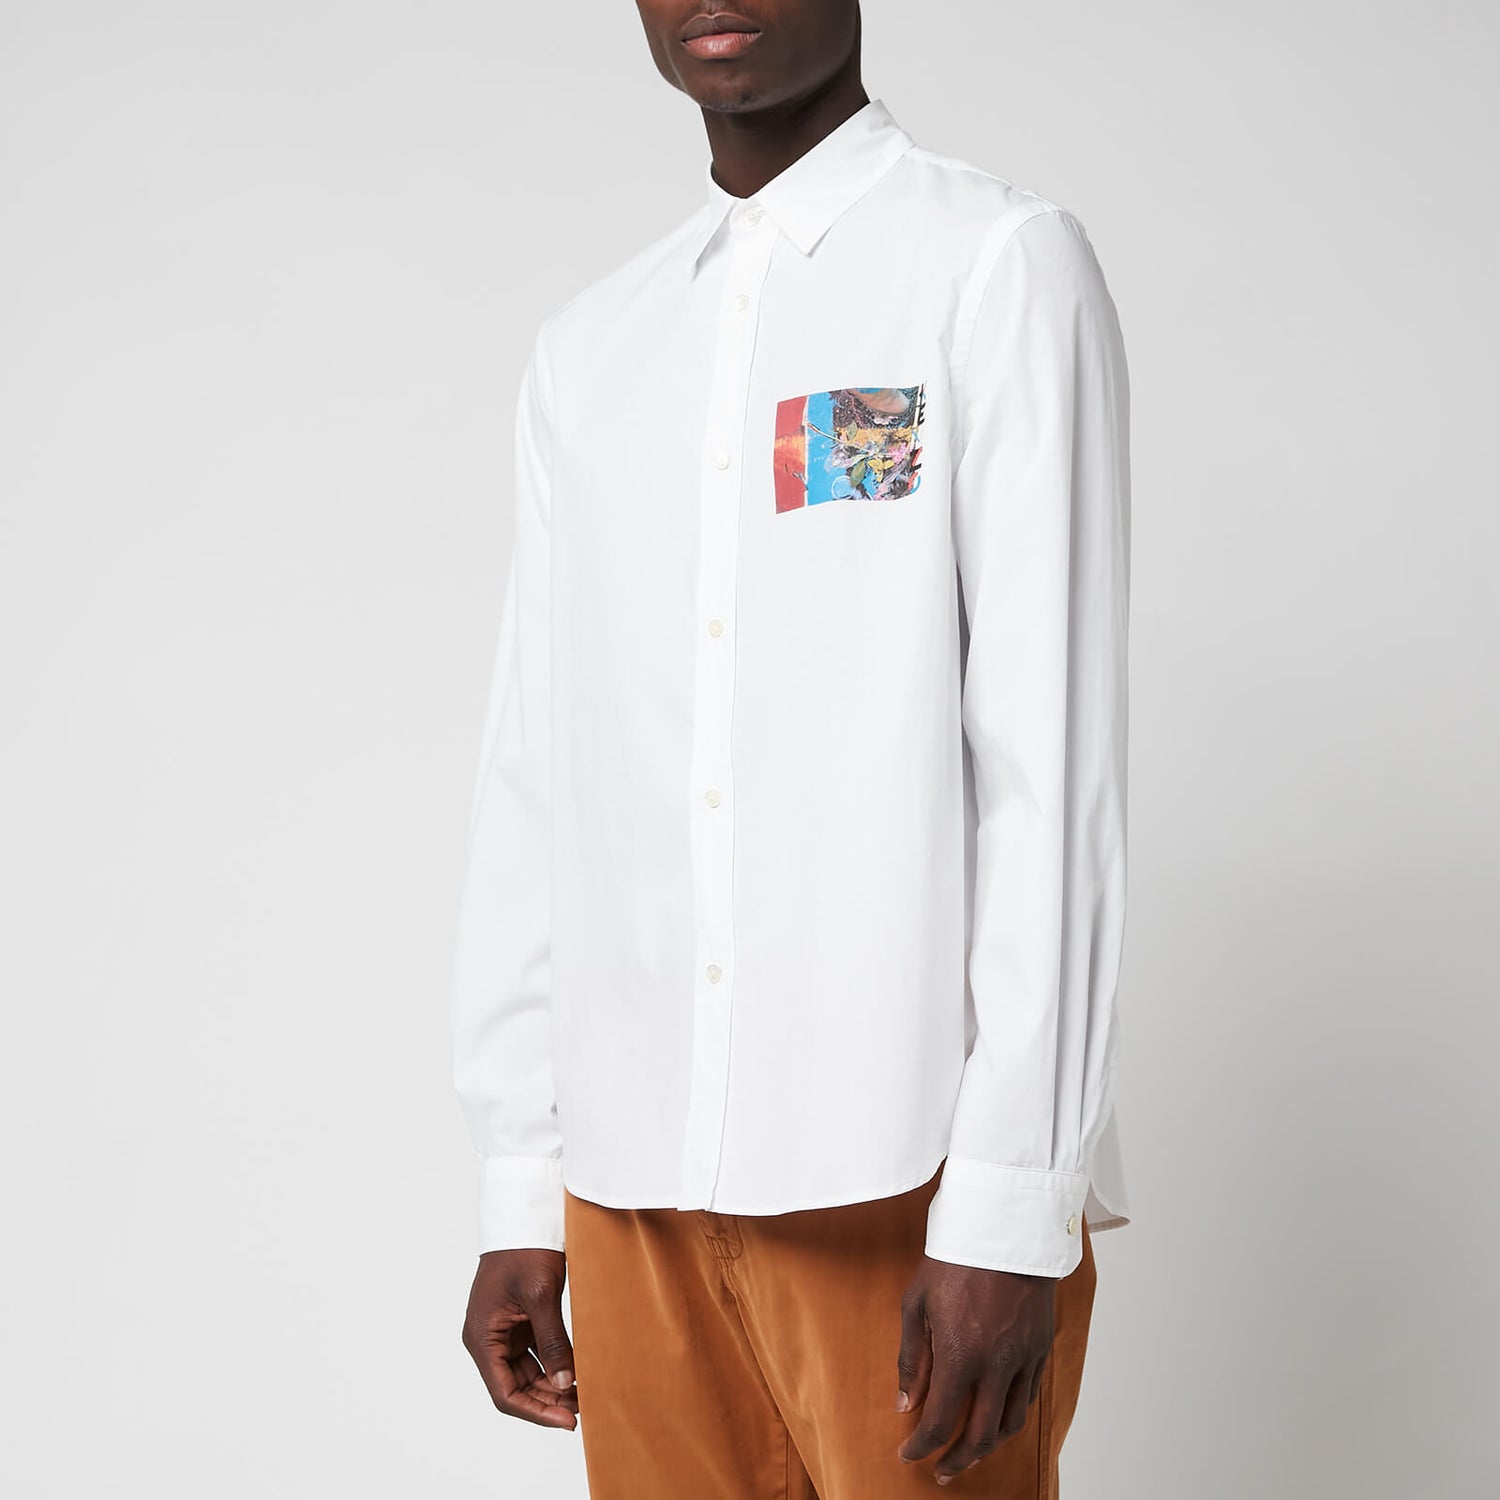 KENZO Men's Casual Shirt - White - 39/15.5inches